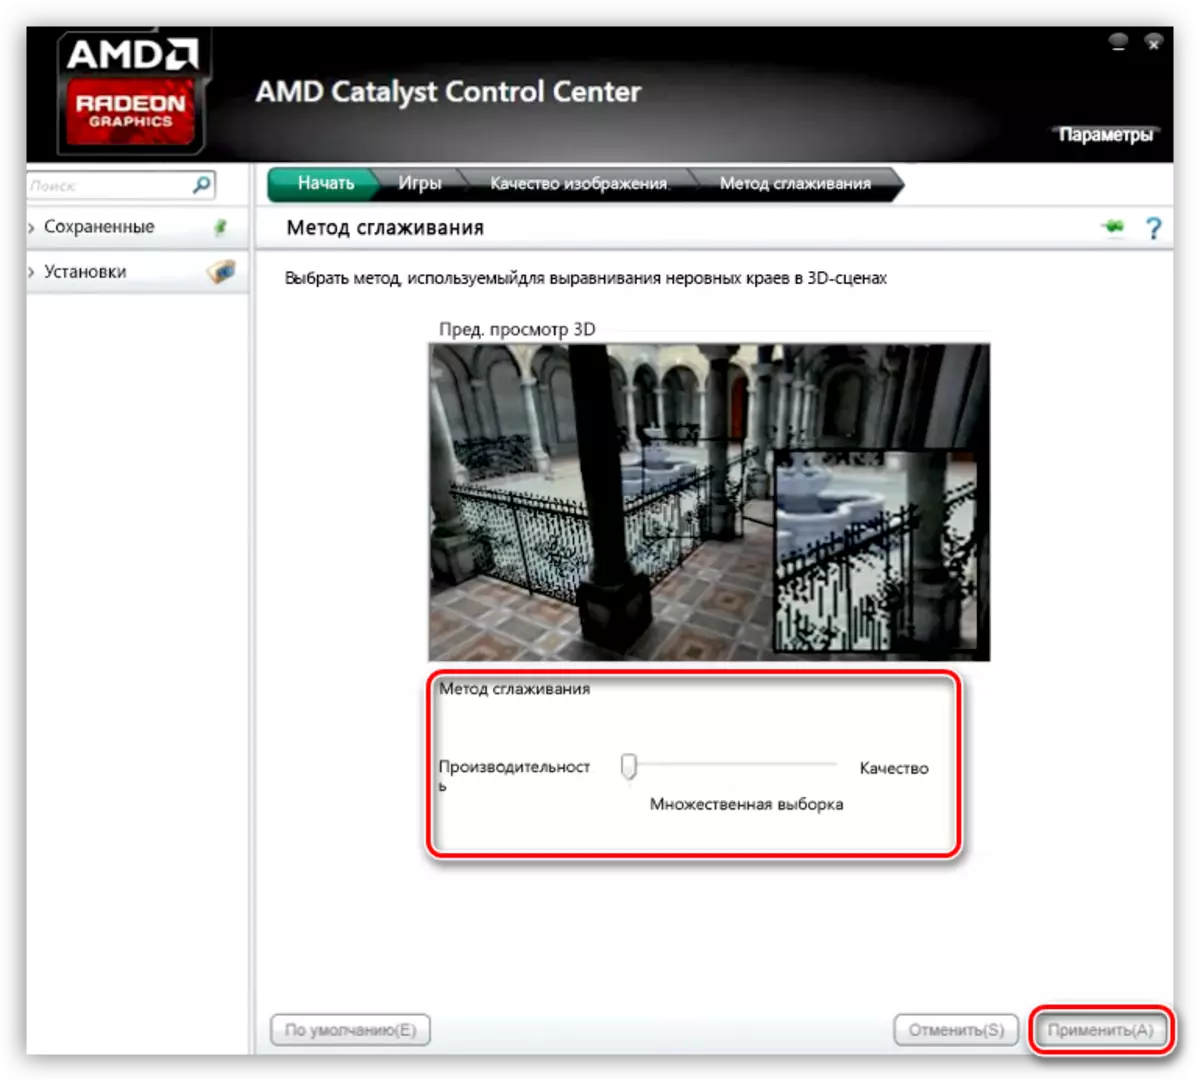 AMD ವೀಡಿಯೋ ಕಾರ್ಡ್ ಸೆಟ್ಟಿಂಗ್ಗಳಲ್ಲಿ ಸರಾಗವಾಗಿಸುವ ವಿಧಾನವನ್ನು ಹೊಂದಿಸಲಾಗುತ್ತಿದೆ